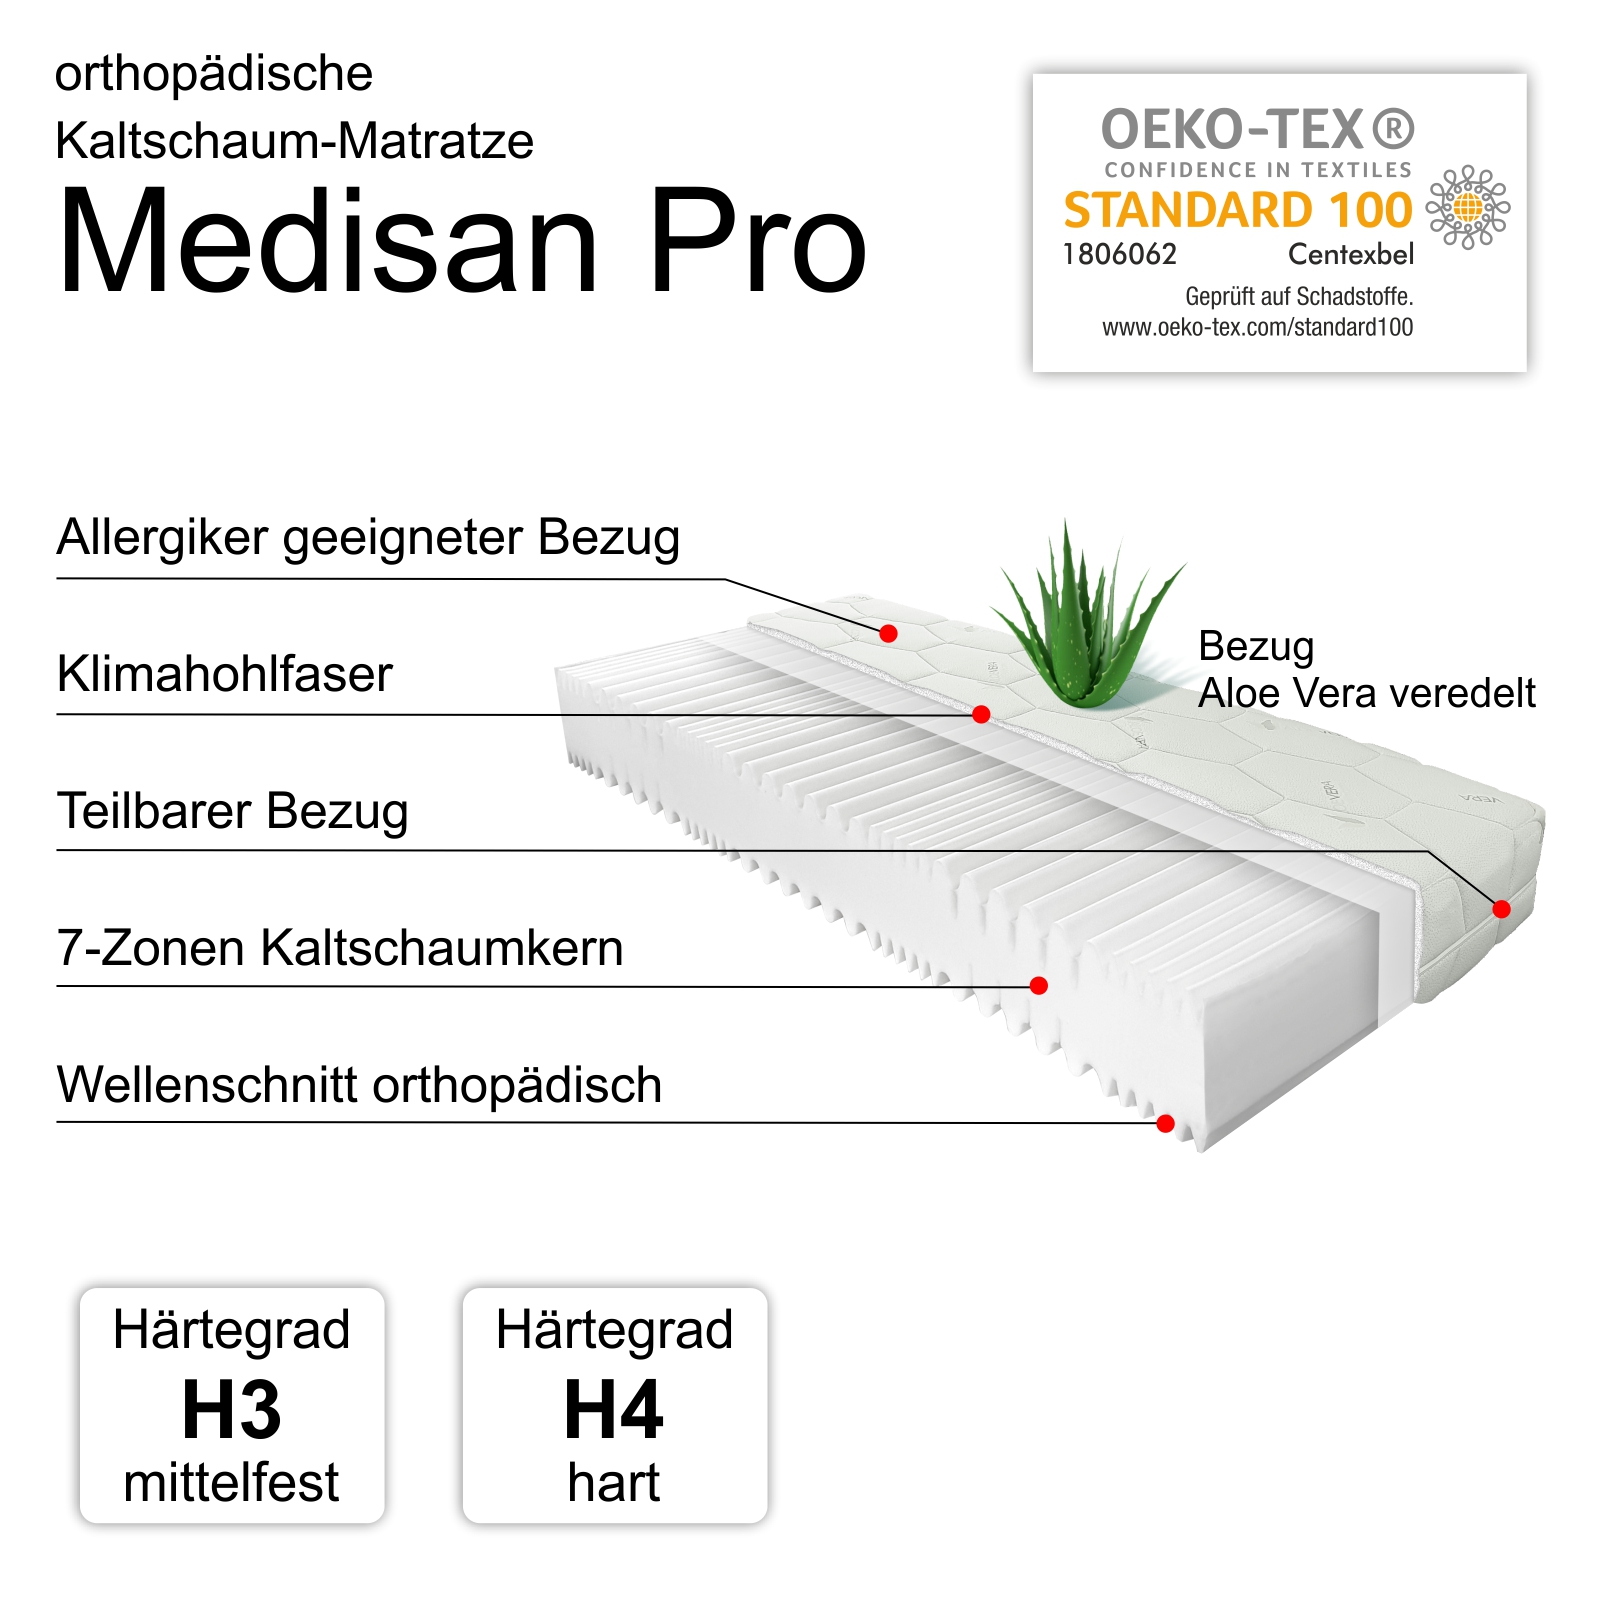 Kaltschaummatratze Medisan Pro, 160x200cm, Härtegrad H4, 7-Zonen Profil